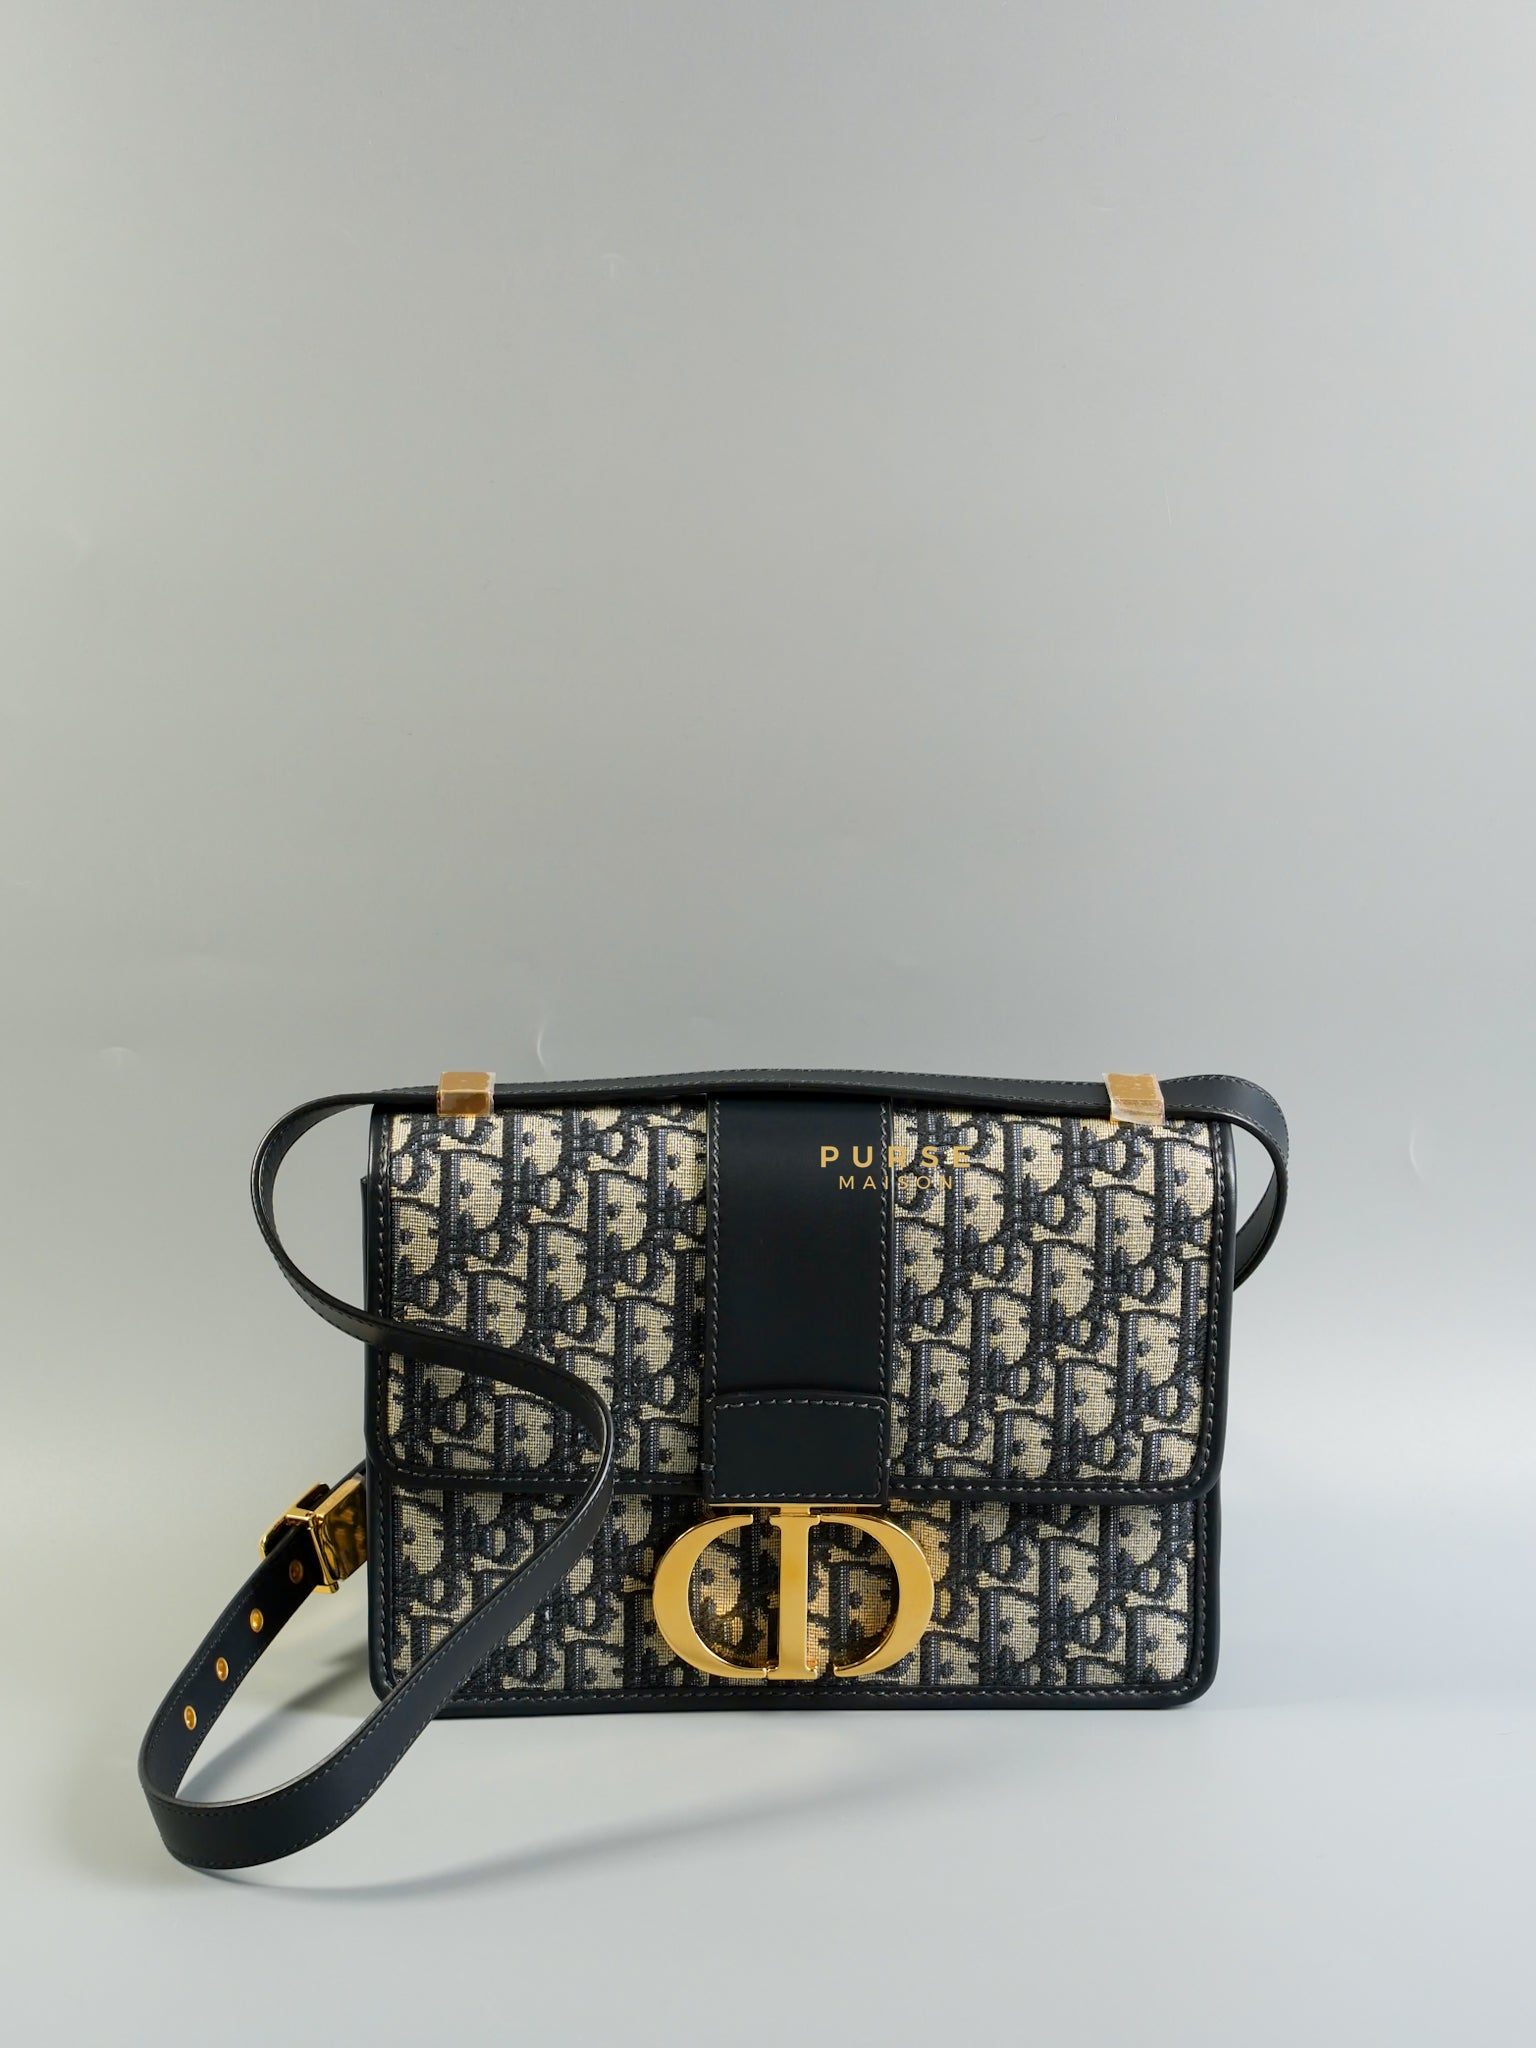 Montaigne 30 Oblique Embroidery Bag in Gold Hardware | Purse Maison Luxury Bags Shop